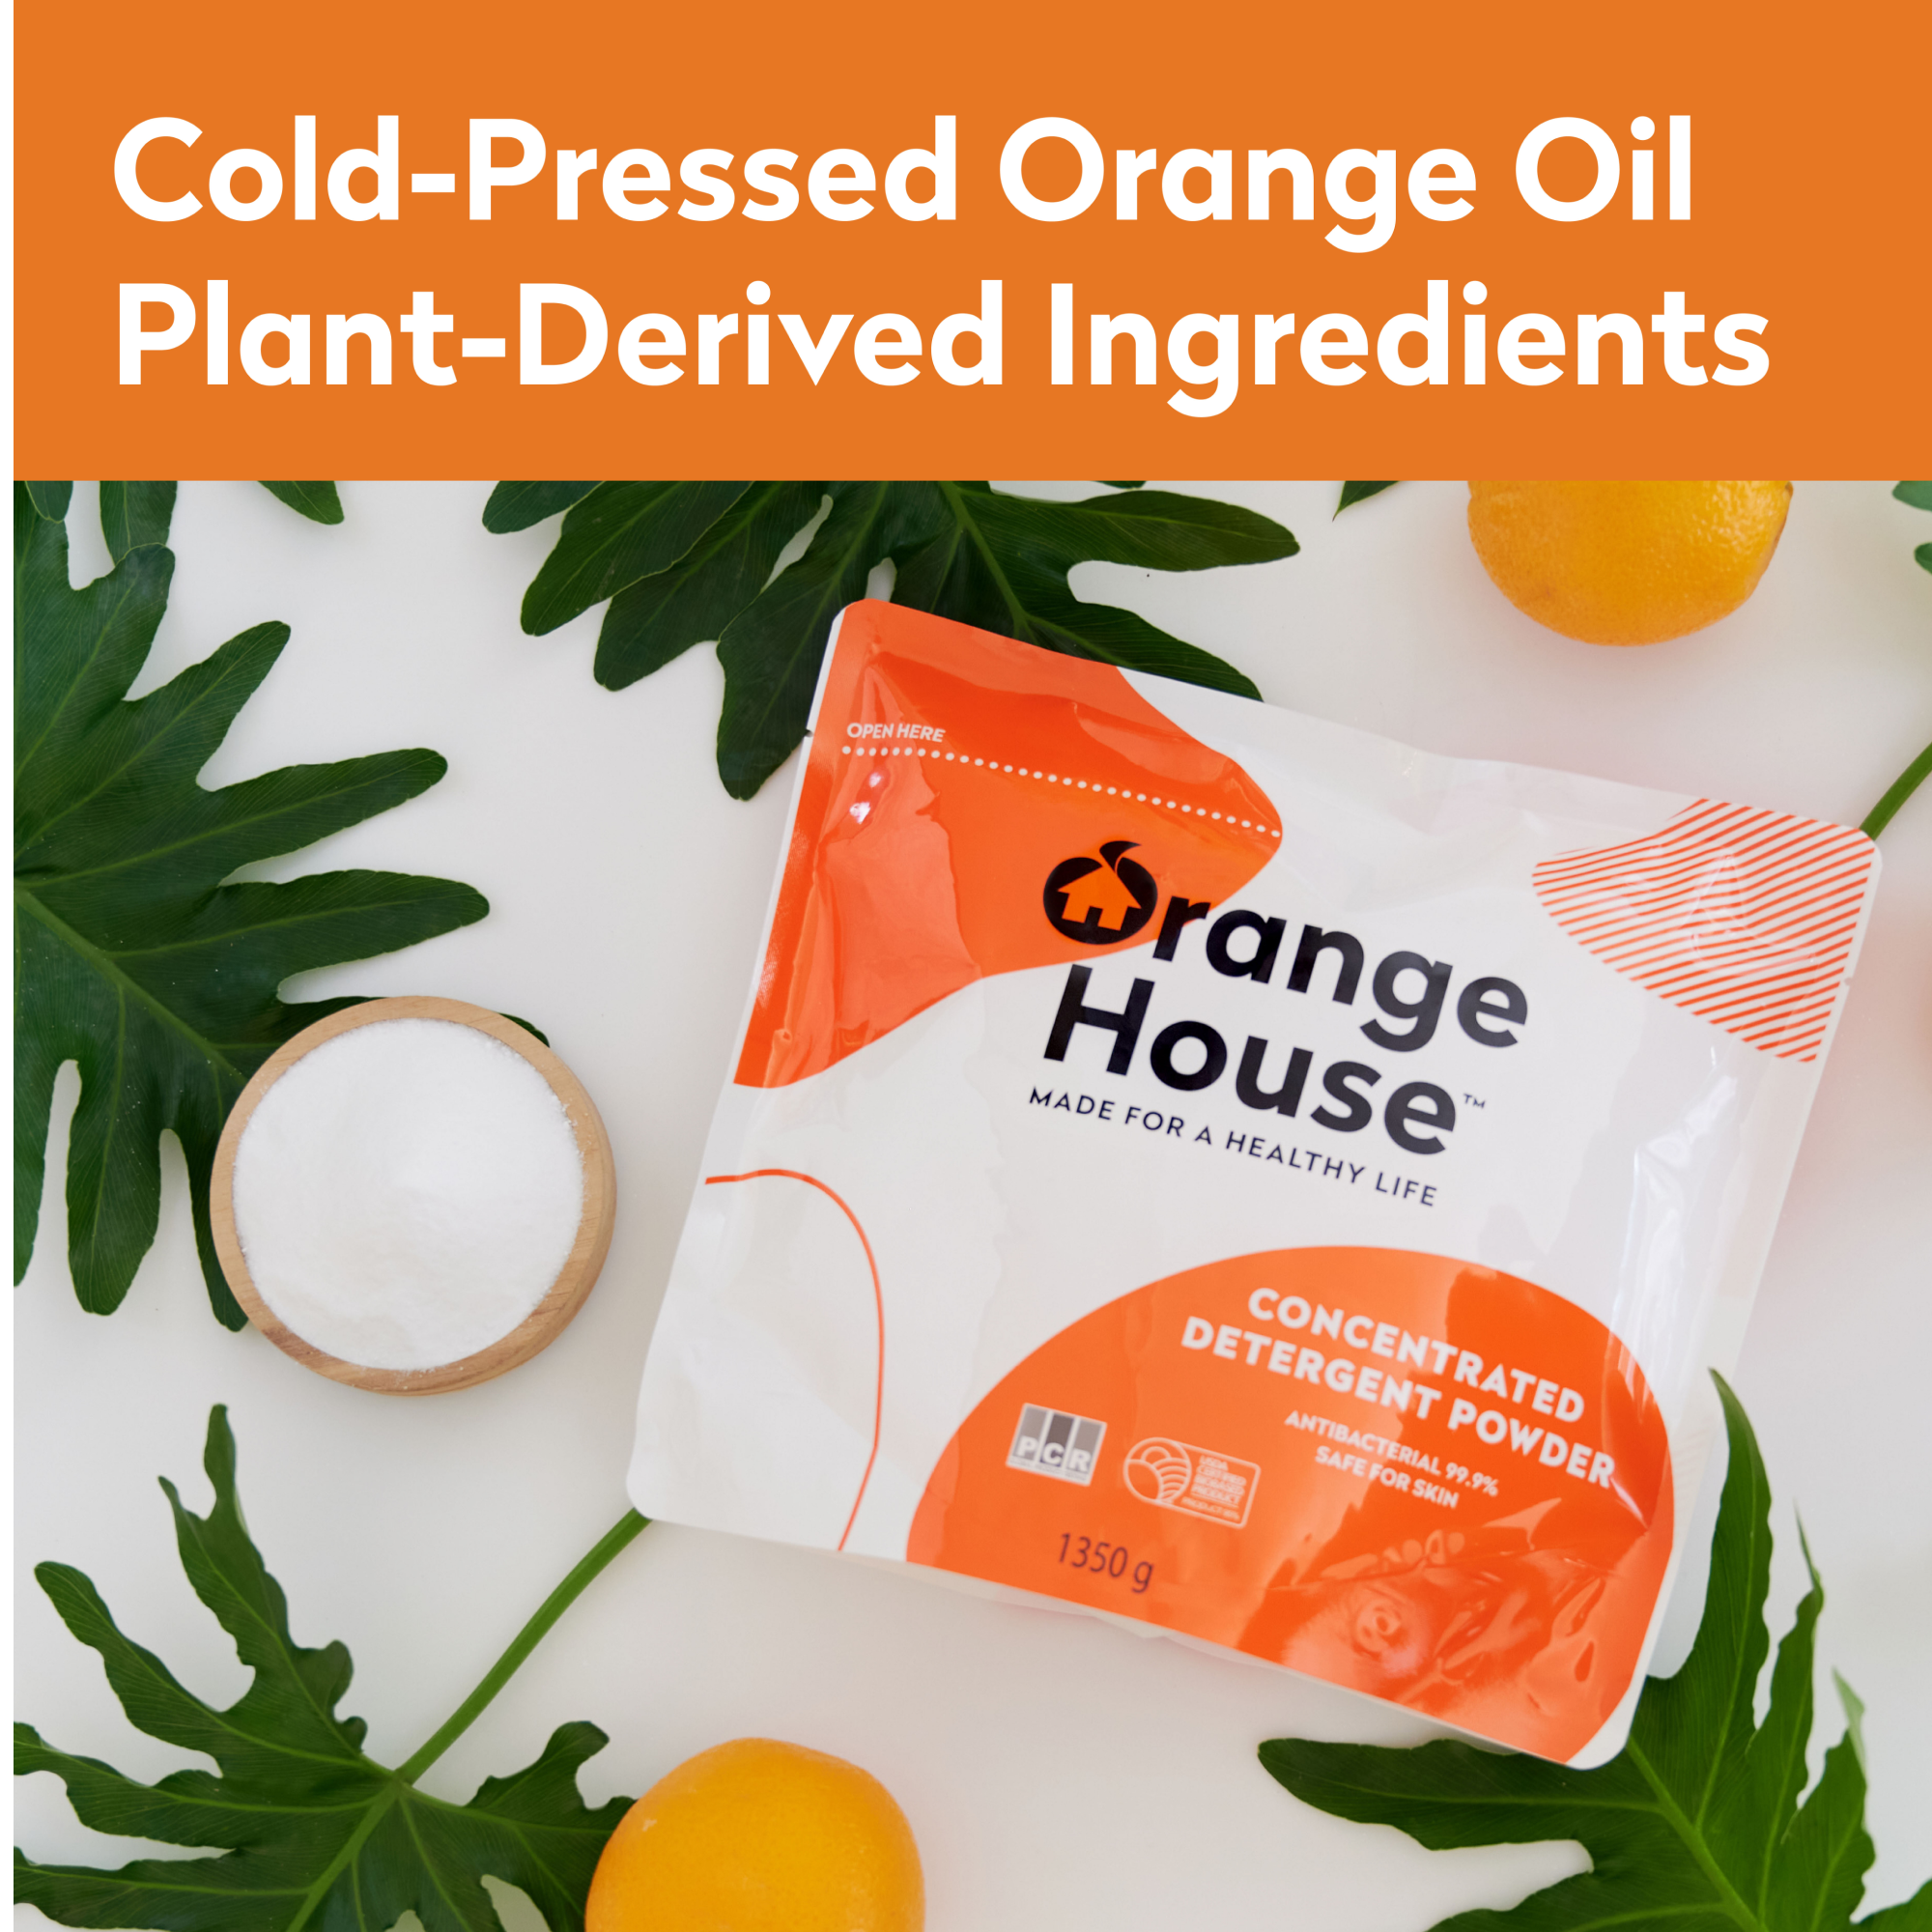 Orange House Concentrated Detergent Powder  1350 g